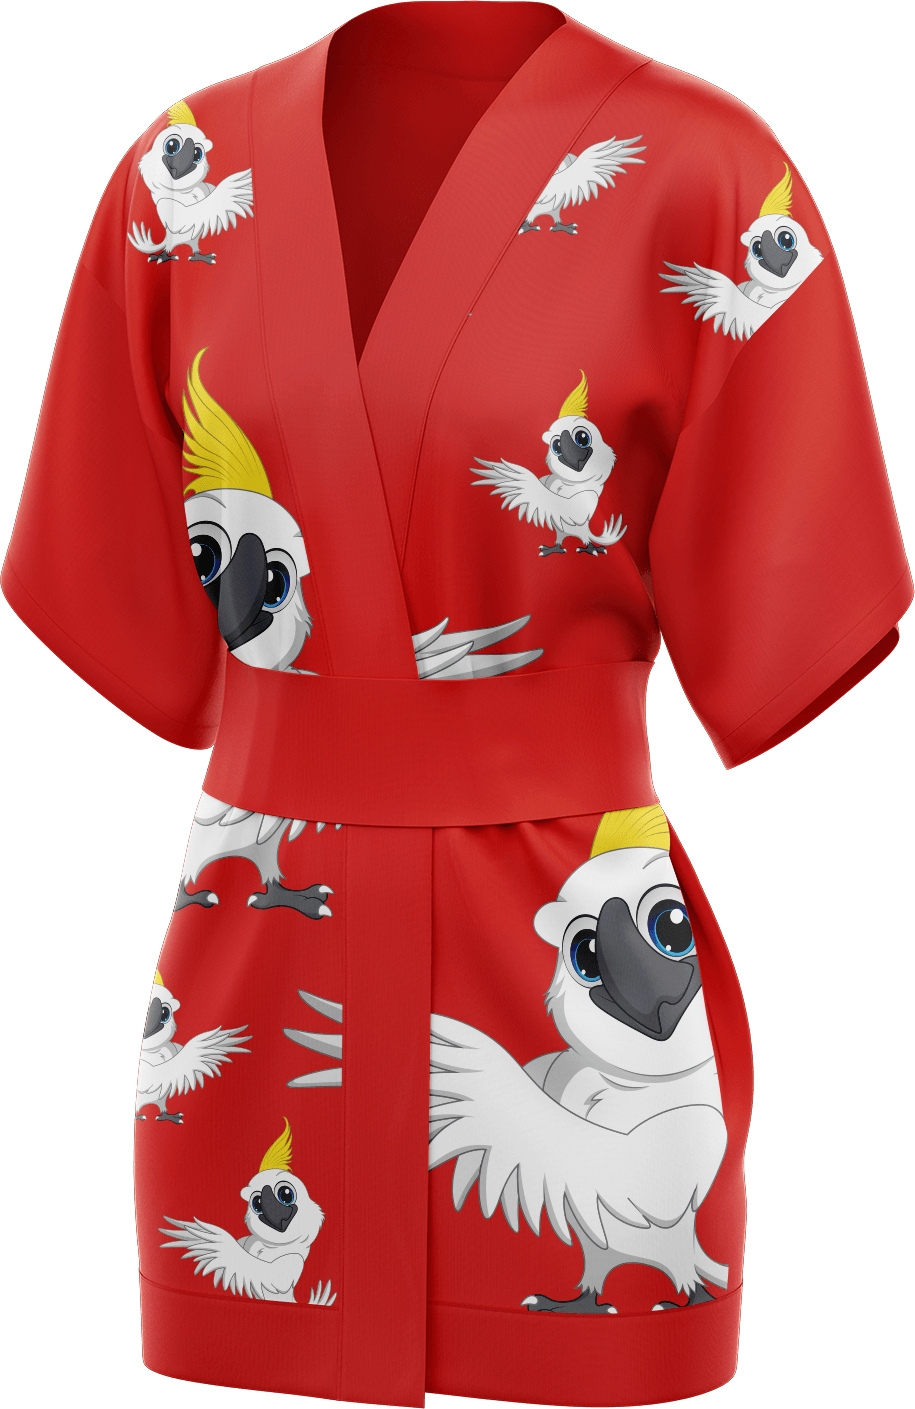 Cockatoo Kimono - fungear.com.au